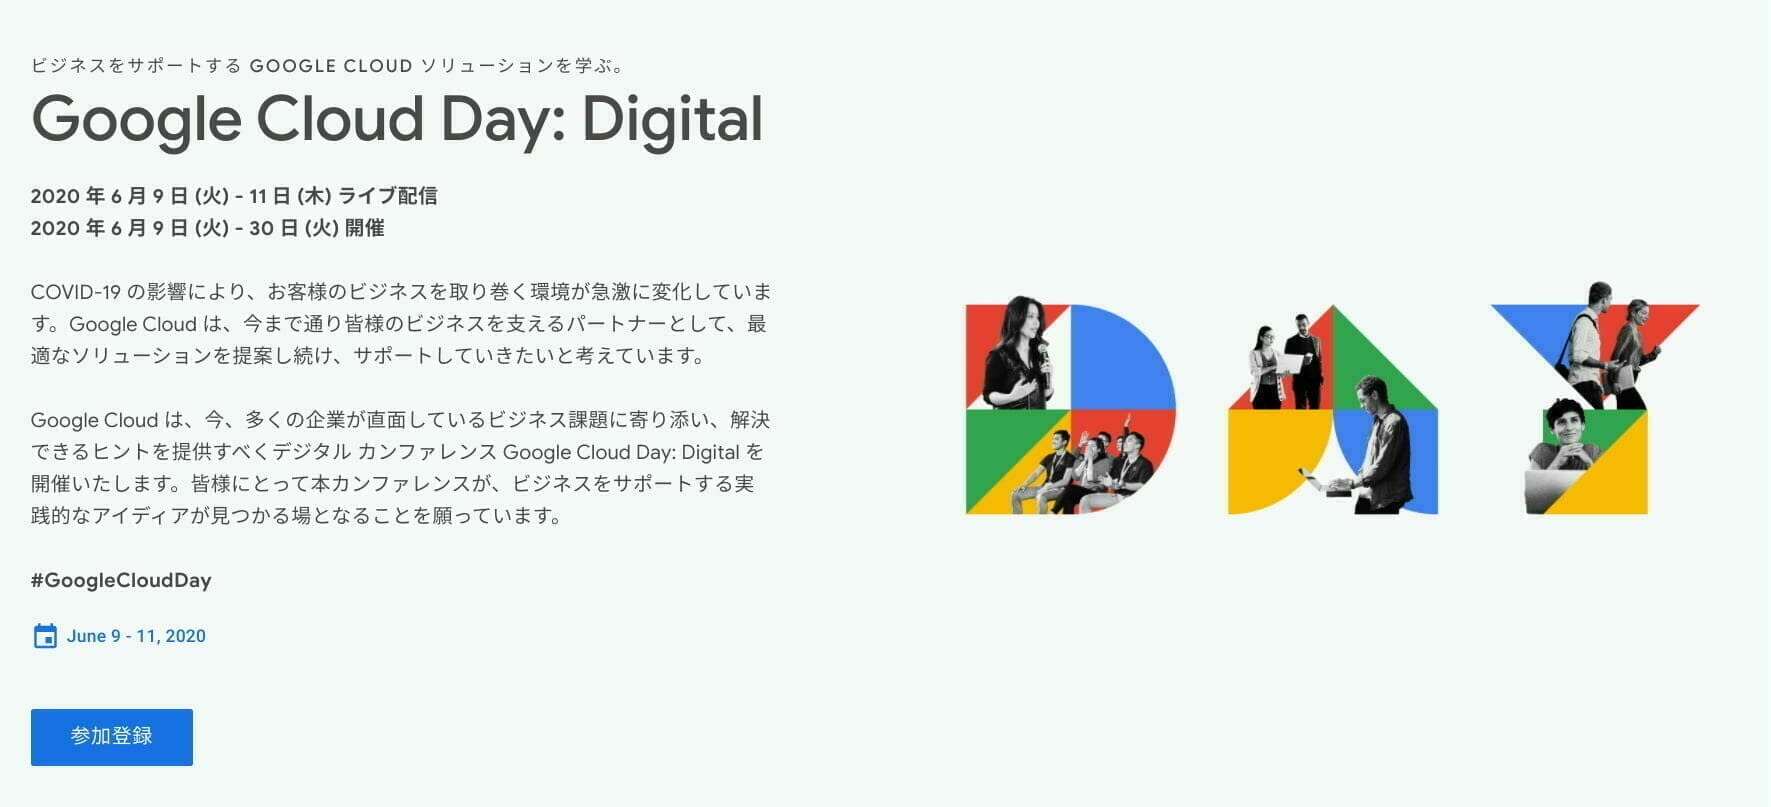 Google Cloud Day: Digital